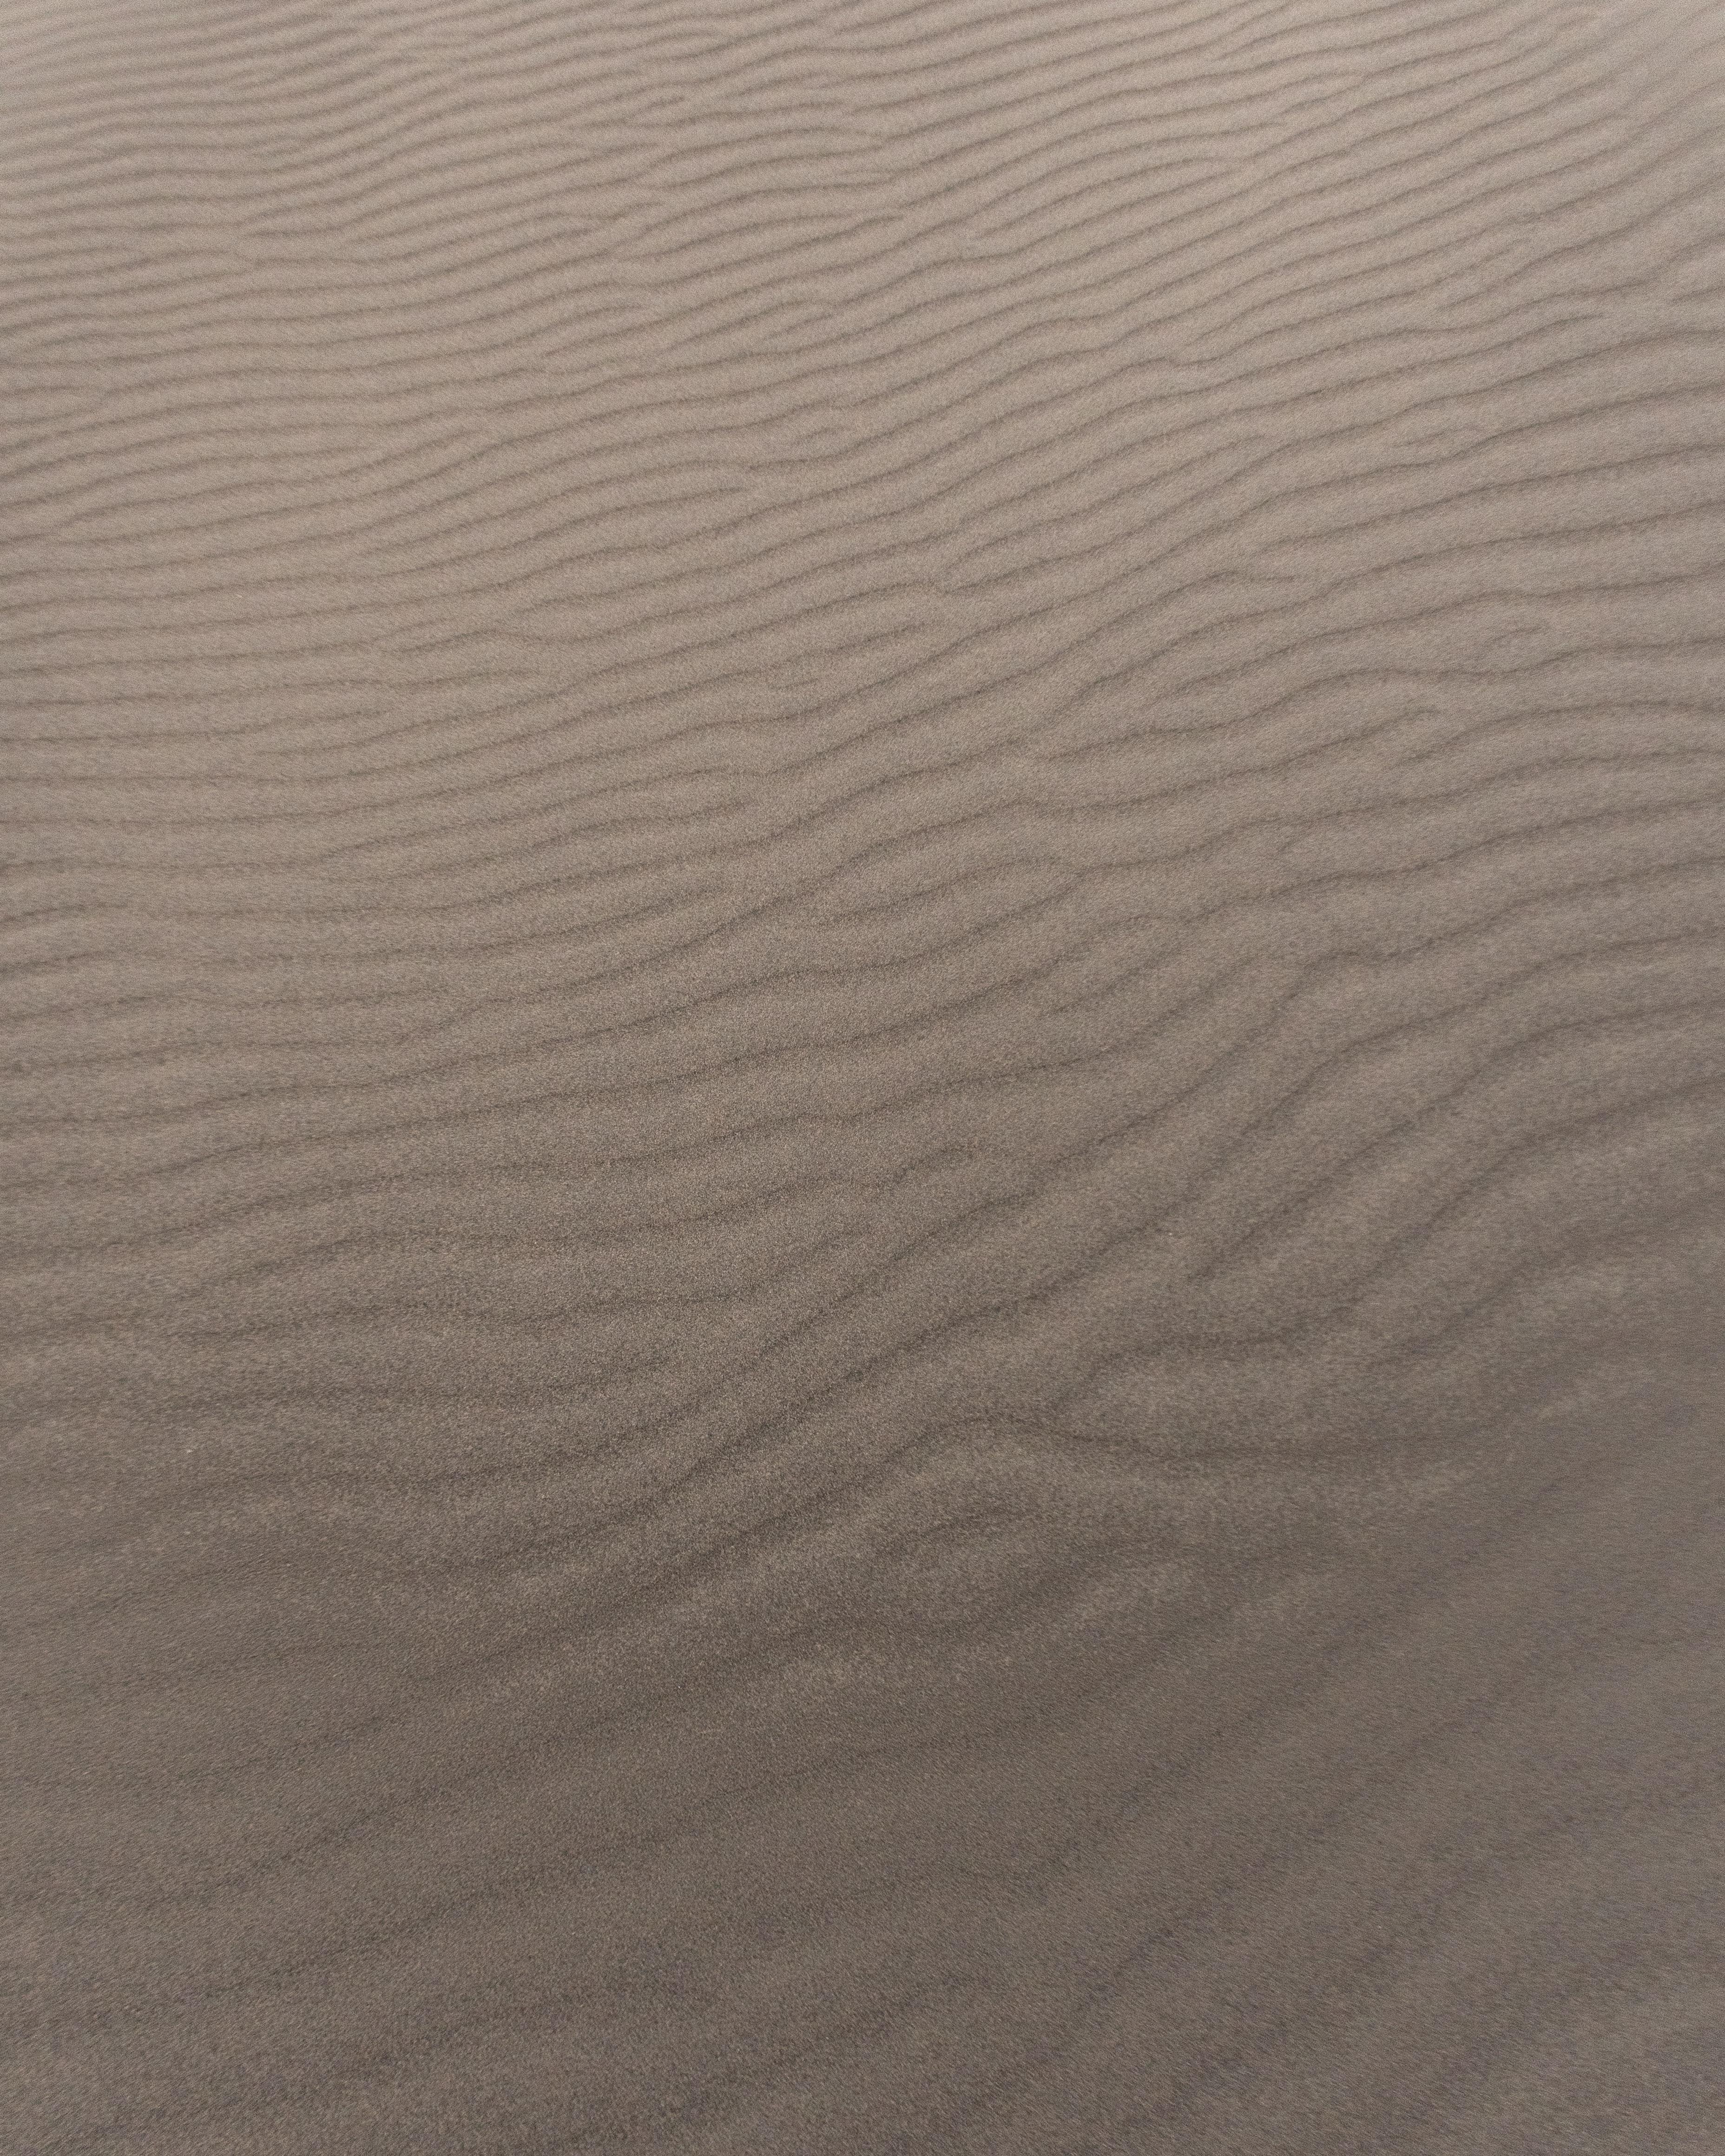 New Lock Screen Wallpapers waves, sand, desert, texture, textures, stripes, streaks